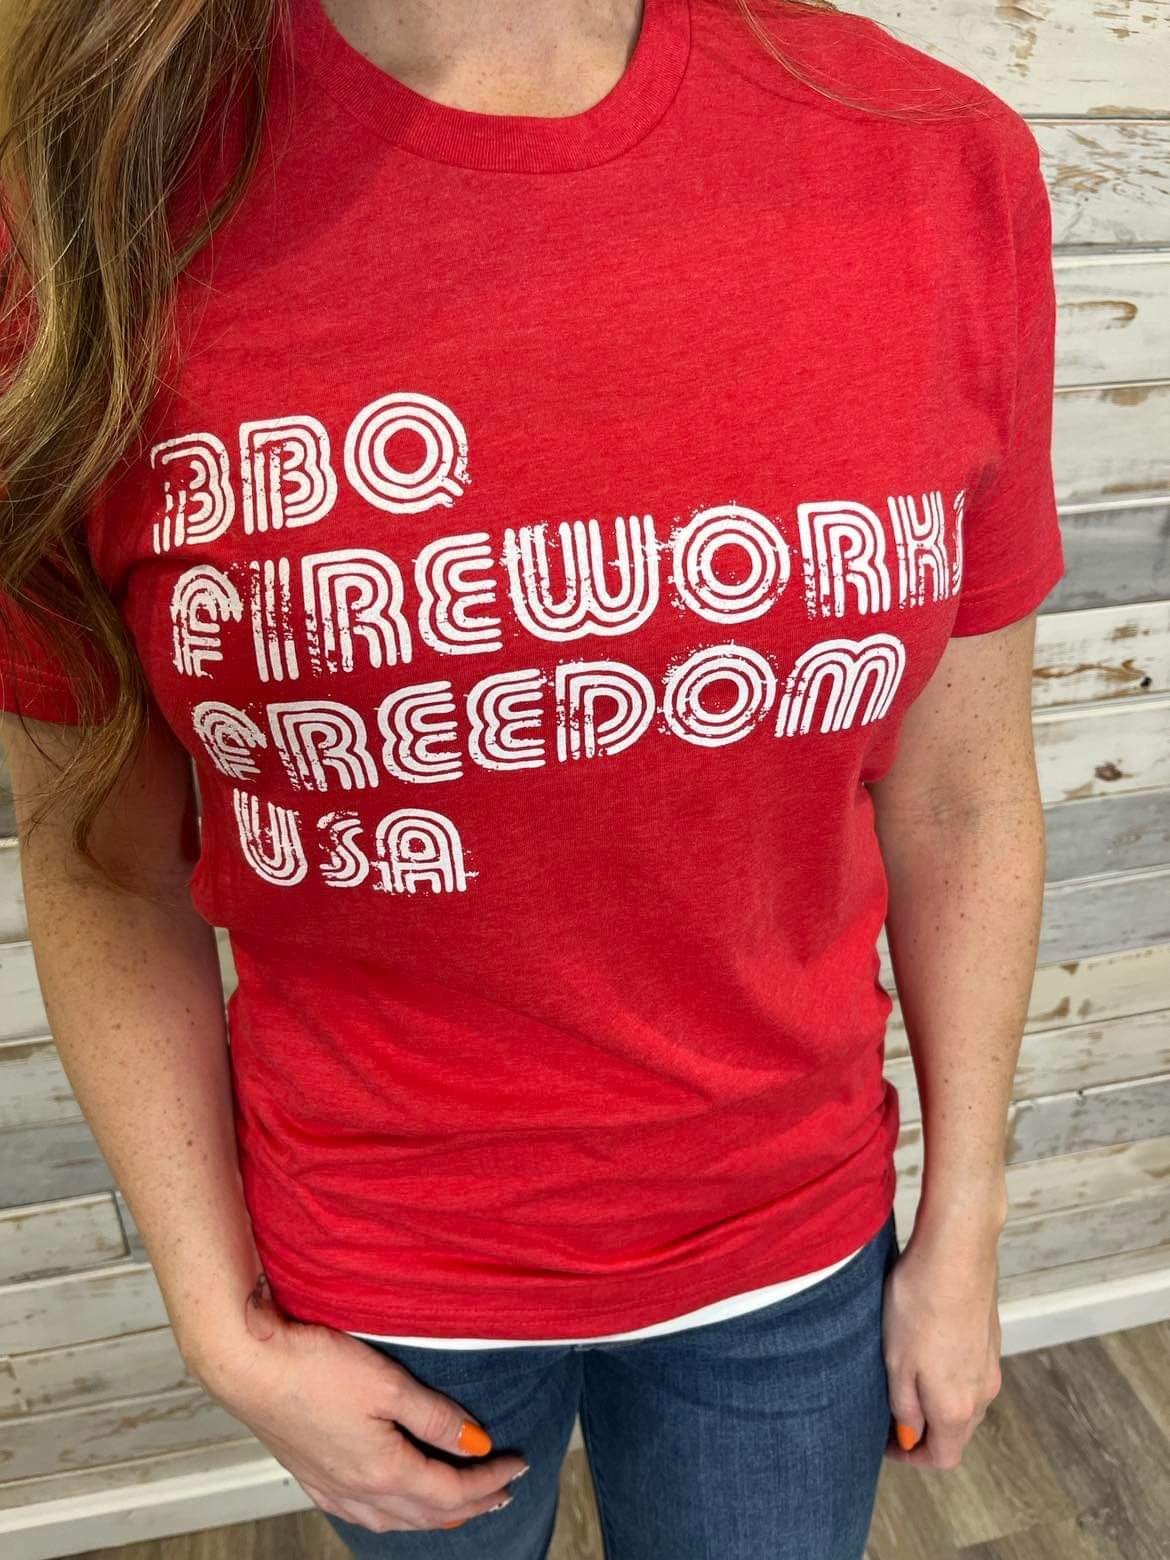 Fireworks & Freedom T-Shirt - Lavender Hills BeautyShe Shed Wholesale